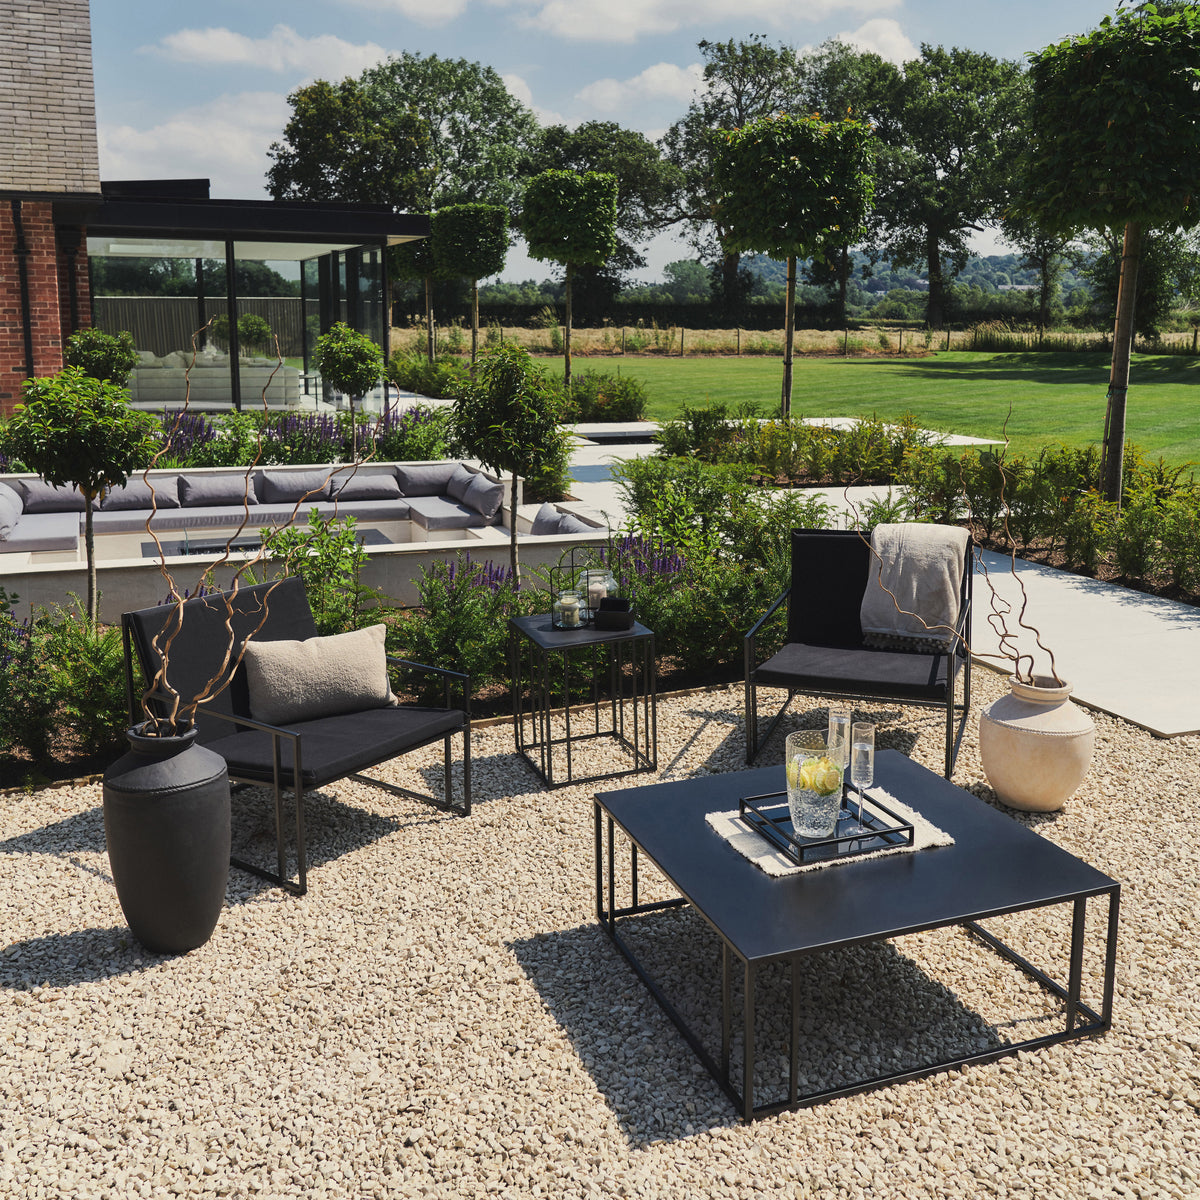 Black Modern Rectangular Garden Furniture Set in a typical setting